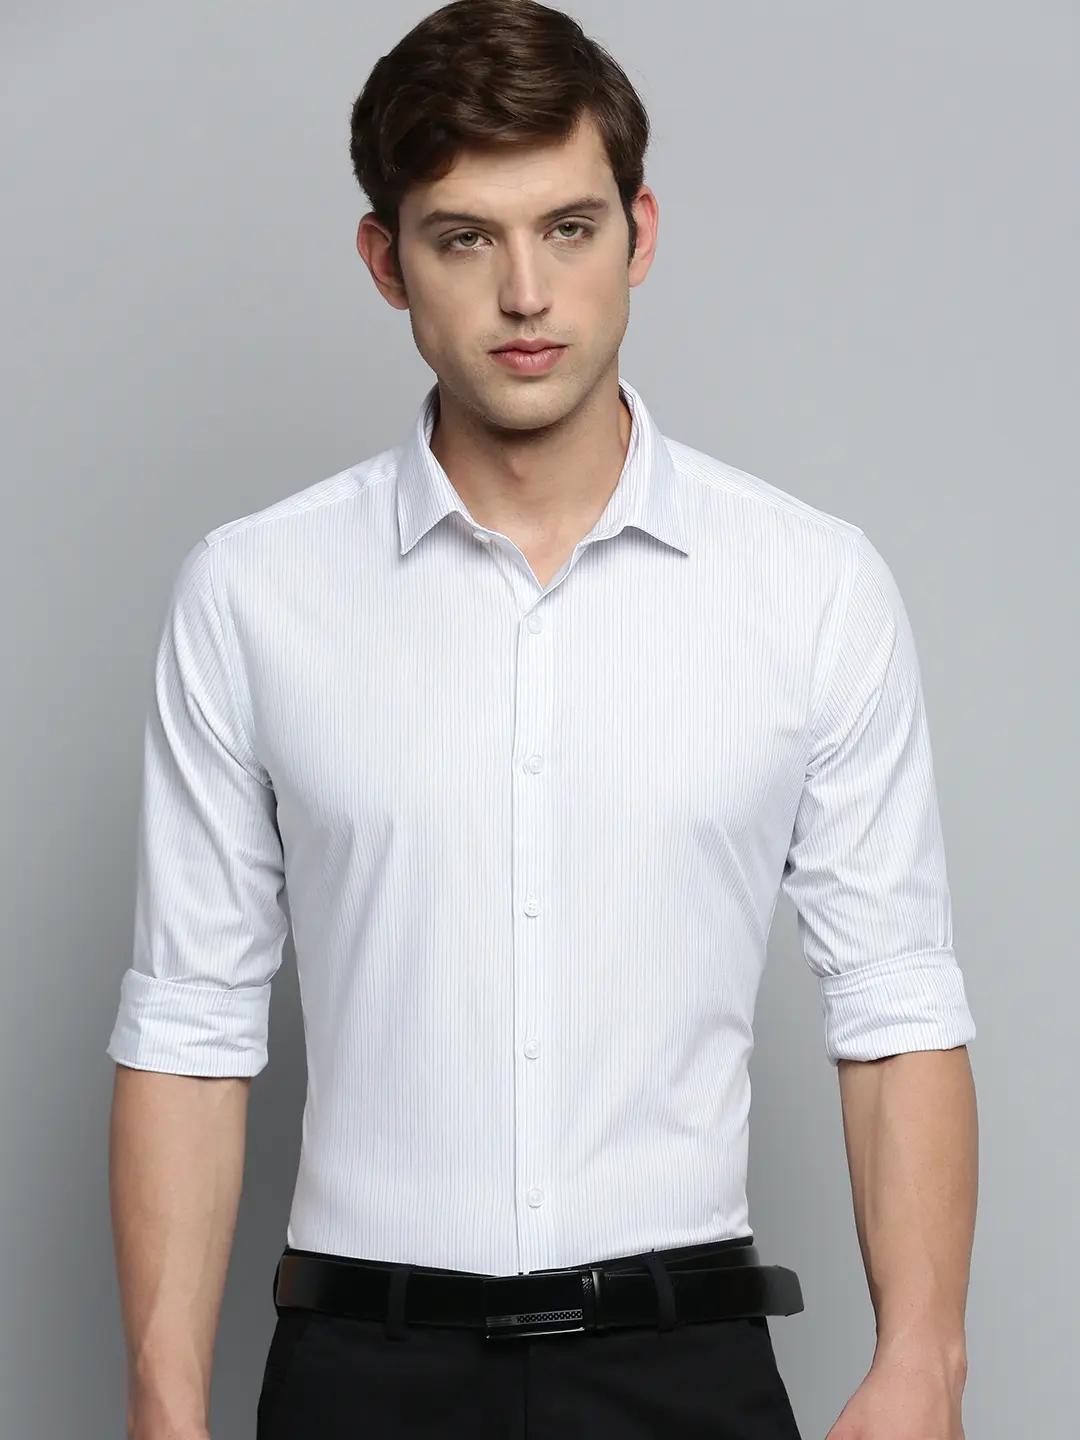 SHOWOFF Men's Spread Collar Striped White Classic Shirt